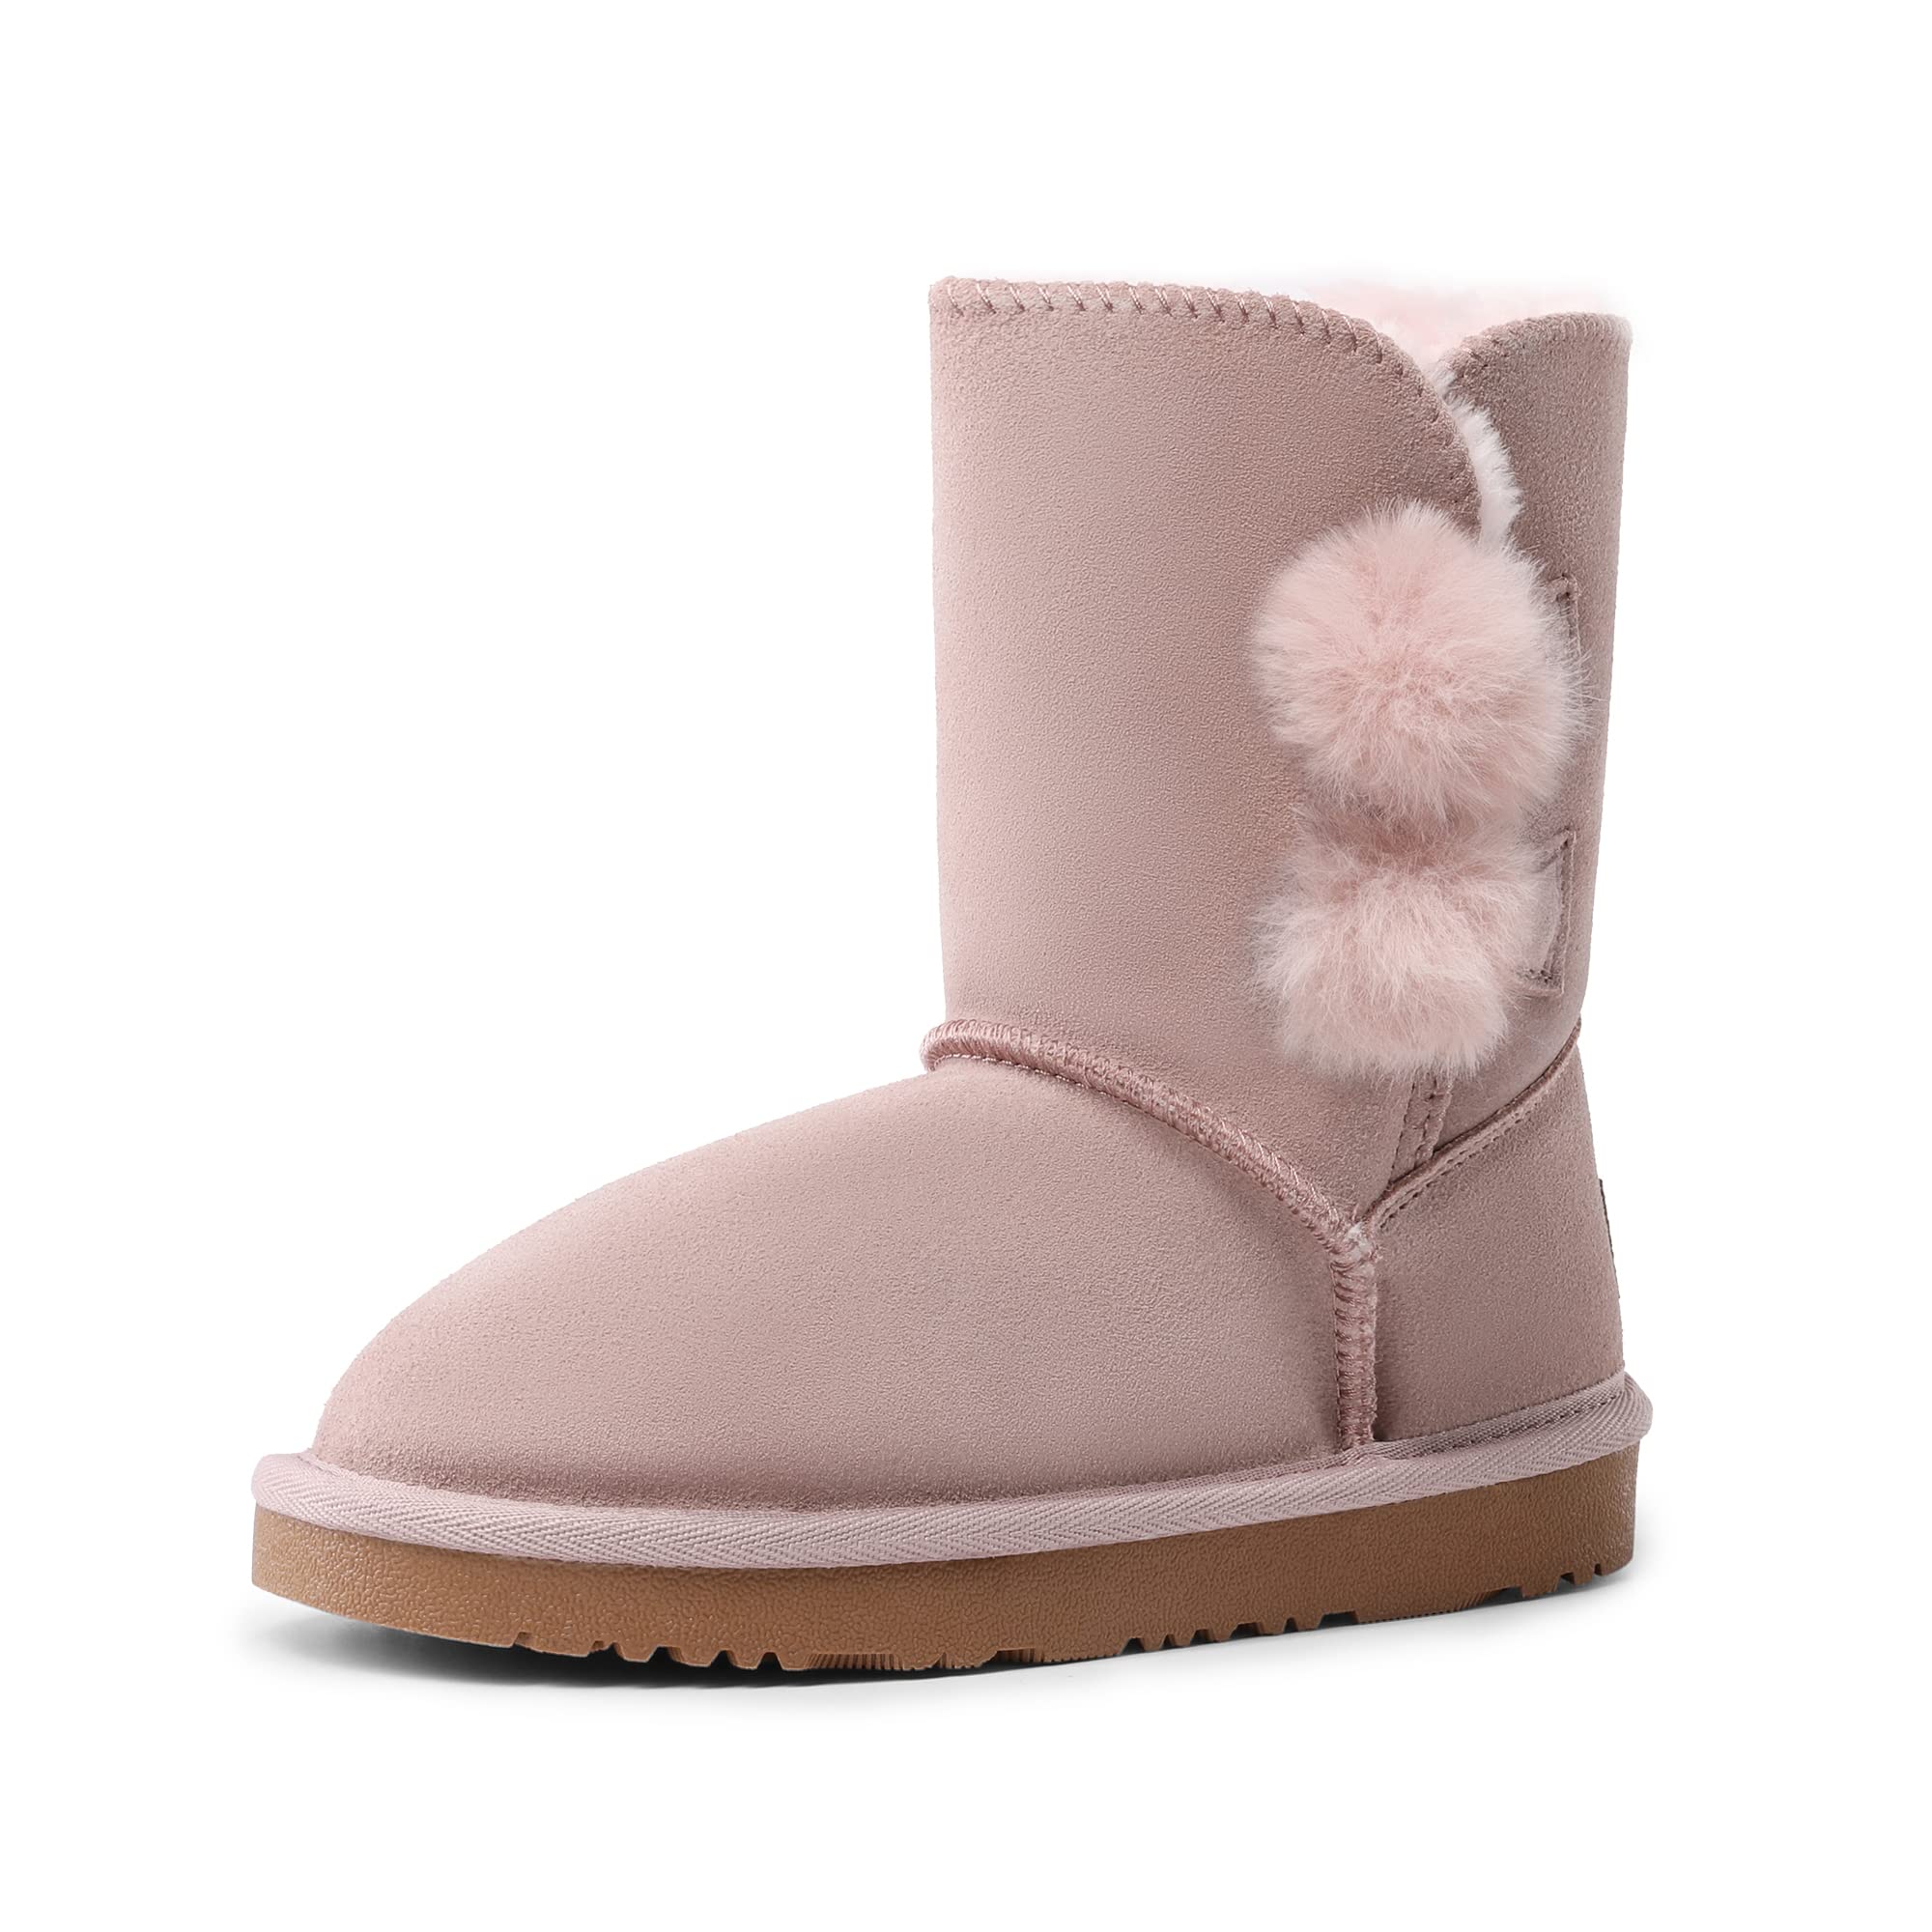 DREAM PAIRS Boys girls Shorty-Pompom Sand Sheepskin Fur Winter Snow Boots Pink Size 3 Little Kid